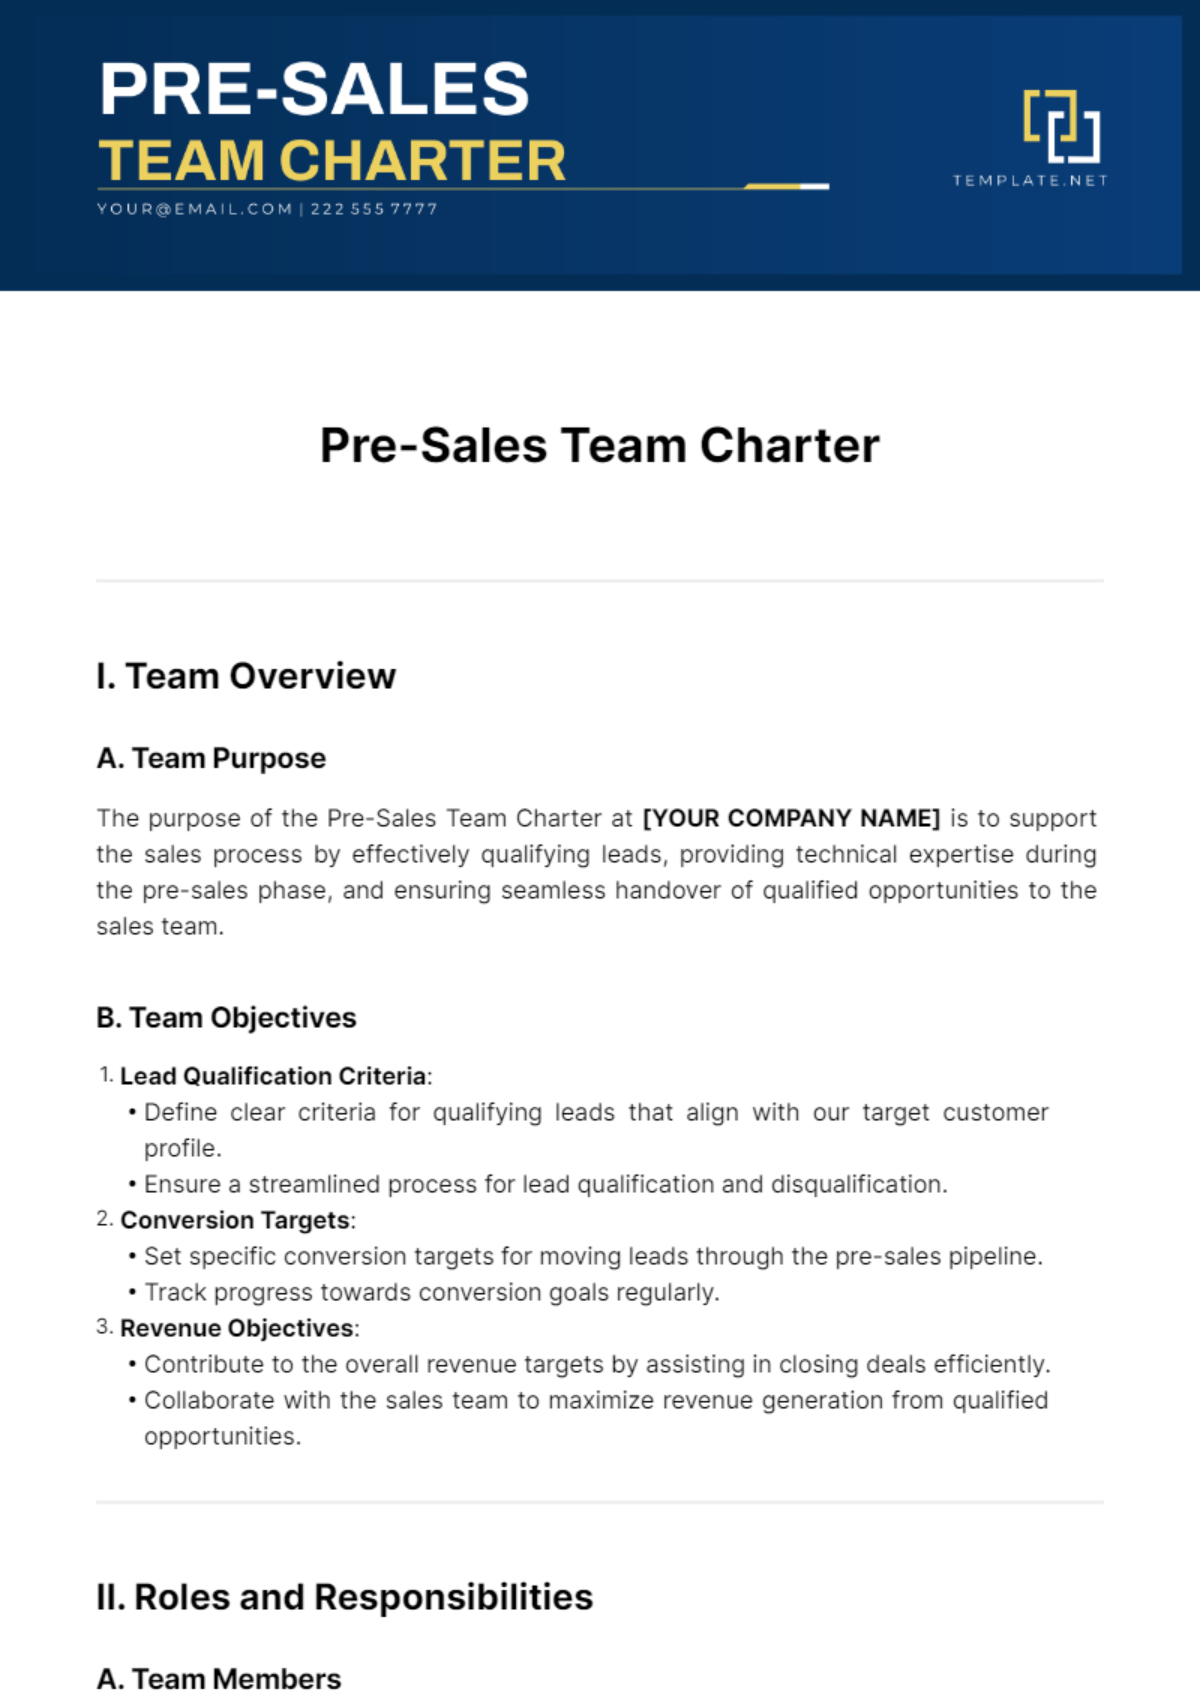 Pre-Sales Team Charter Template